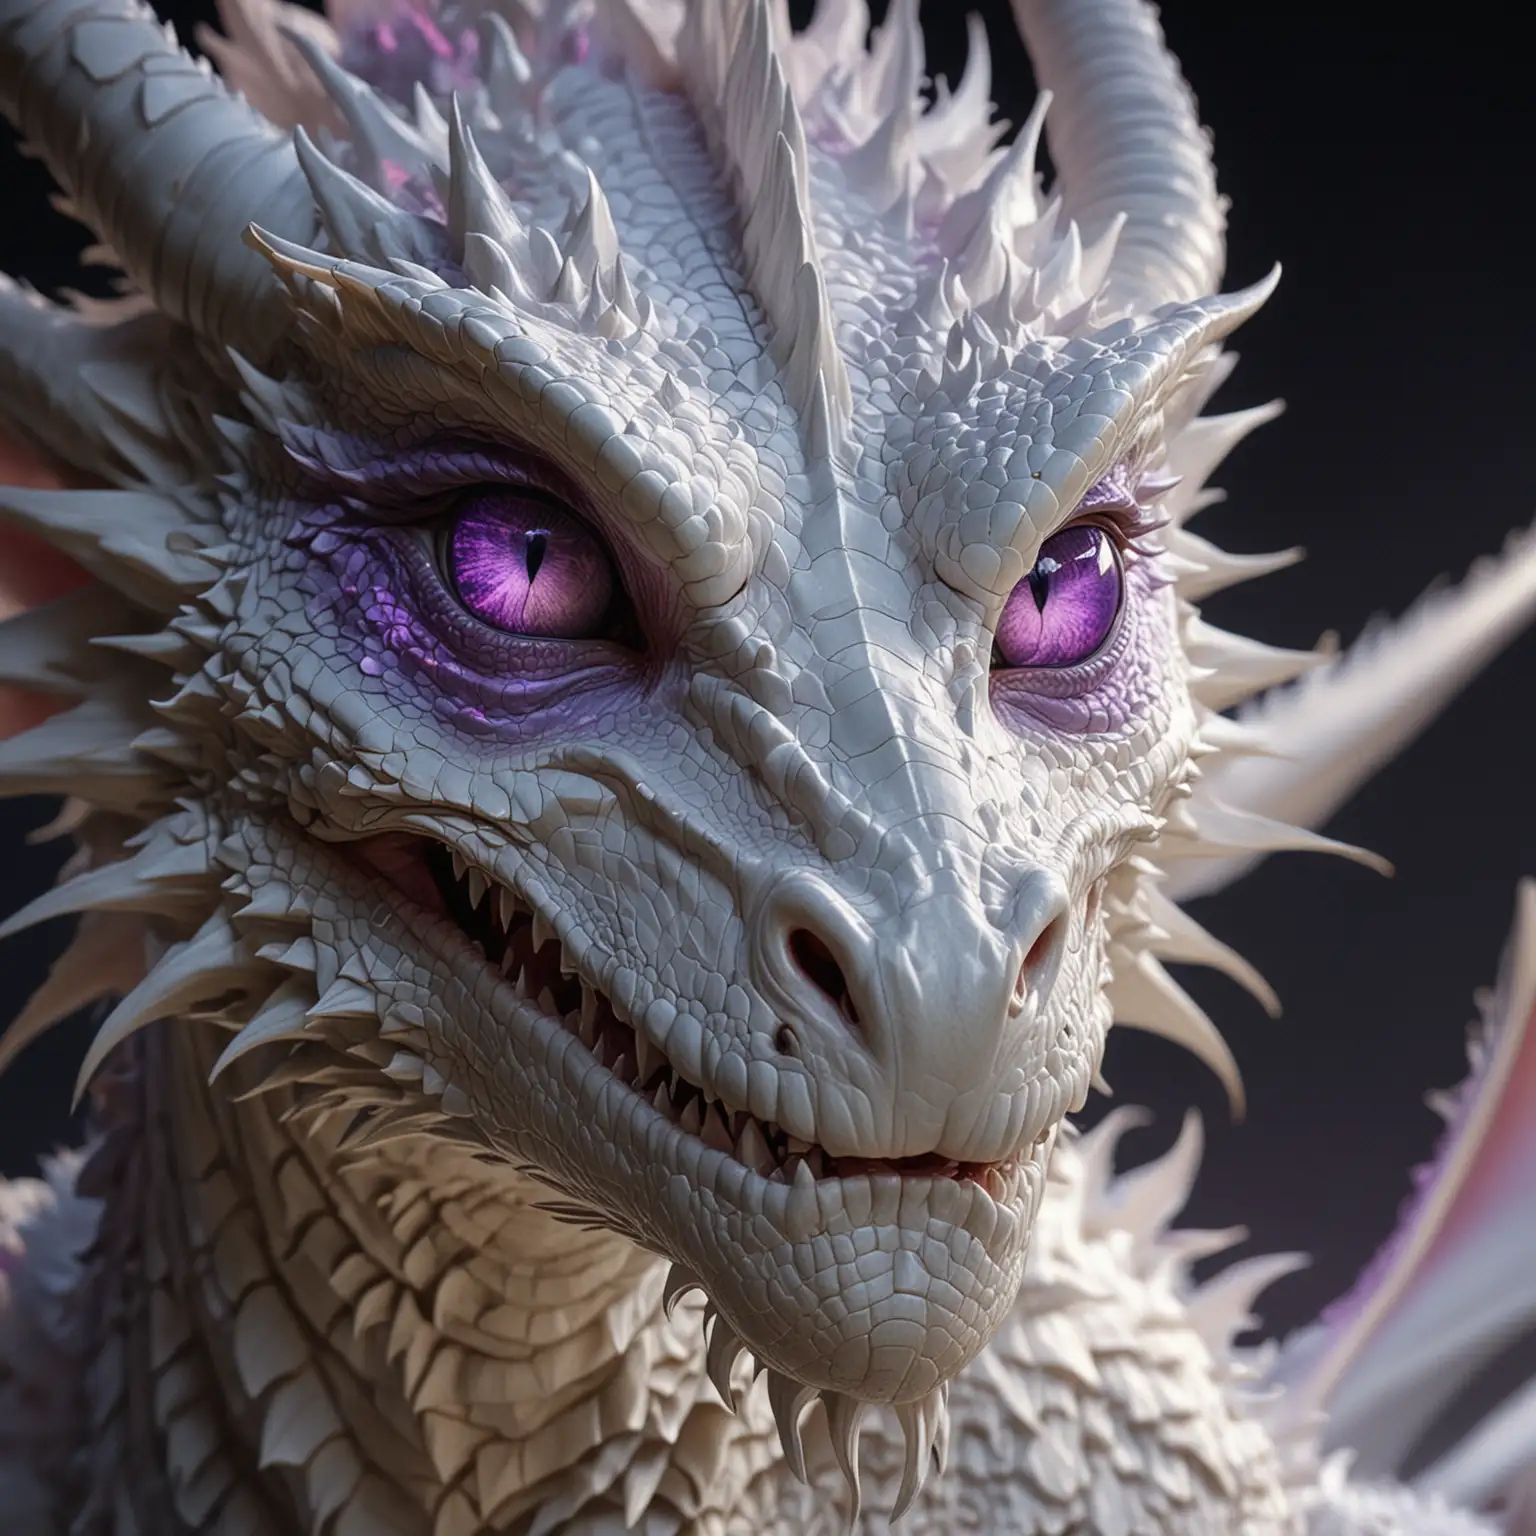 Hyperrealistic White Light Dragon Portrait with Purple Eyes